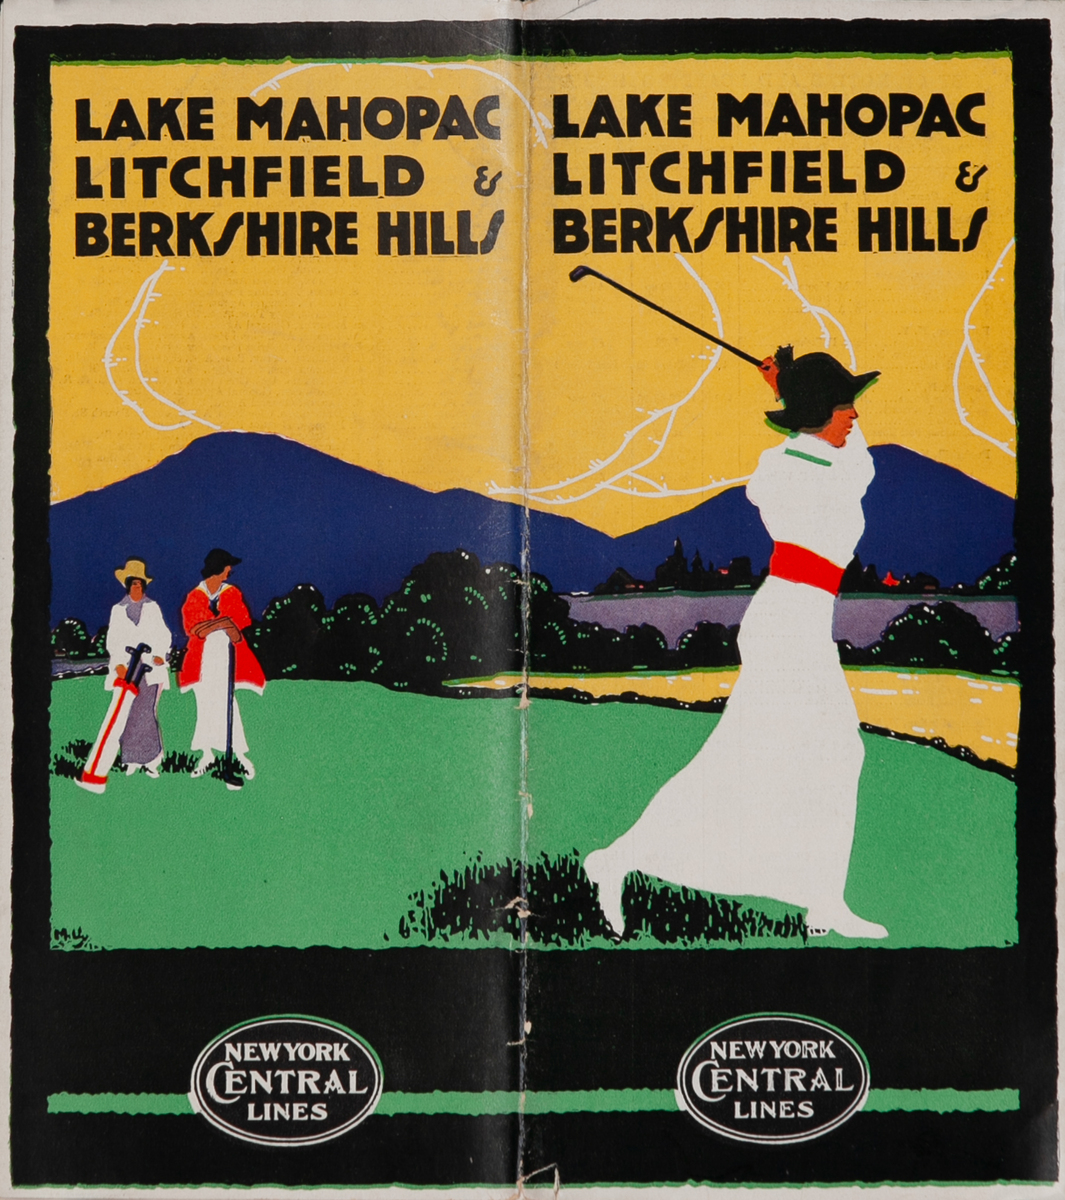 Lake Mahopac Litchfield and Berkshire Hills New York Central Lines Original Travel Brochure